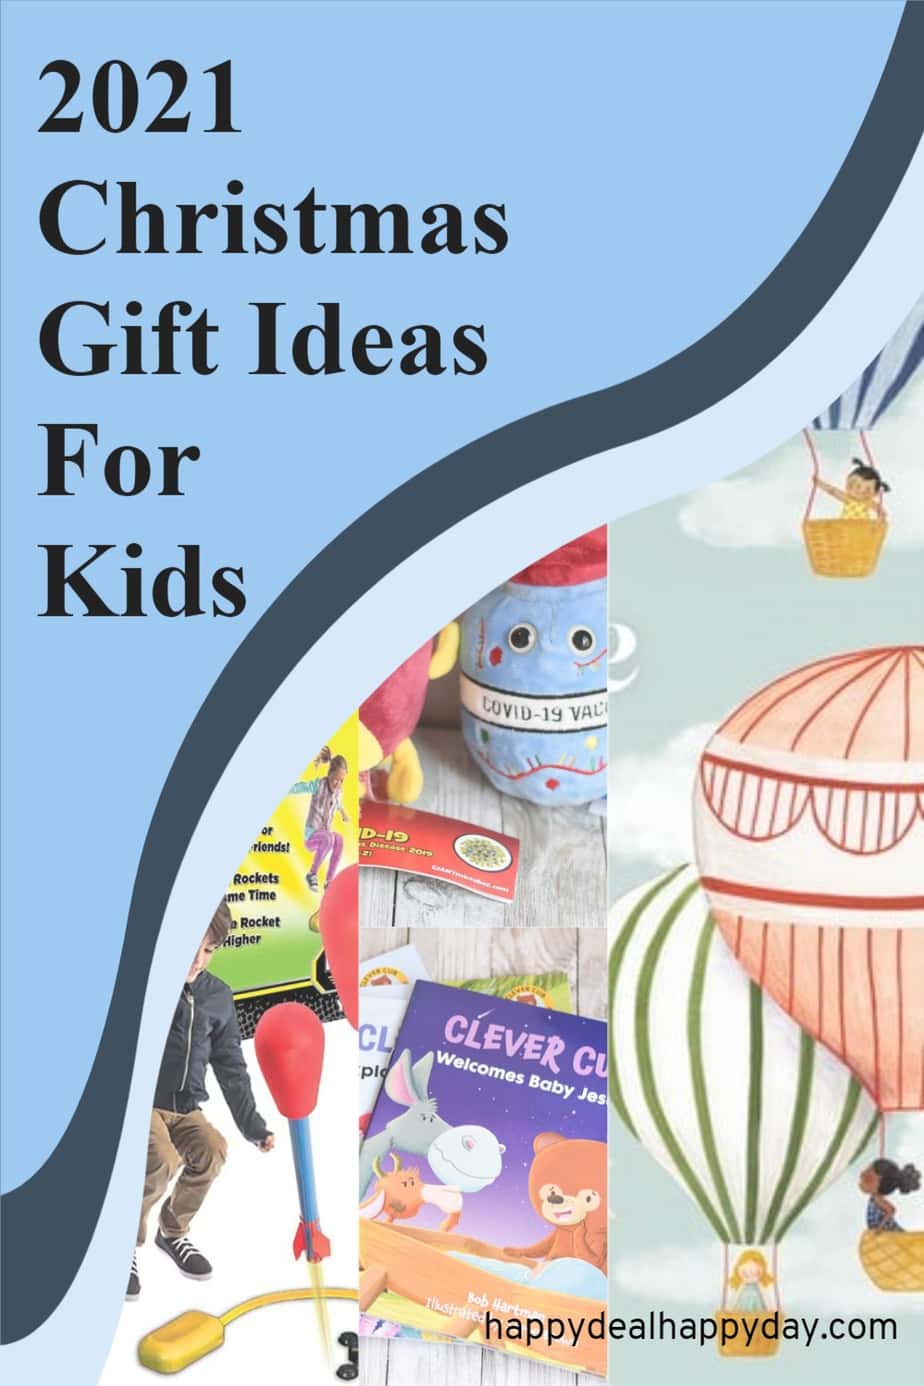 2021 Christmas Gift Ideas For Kids